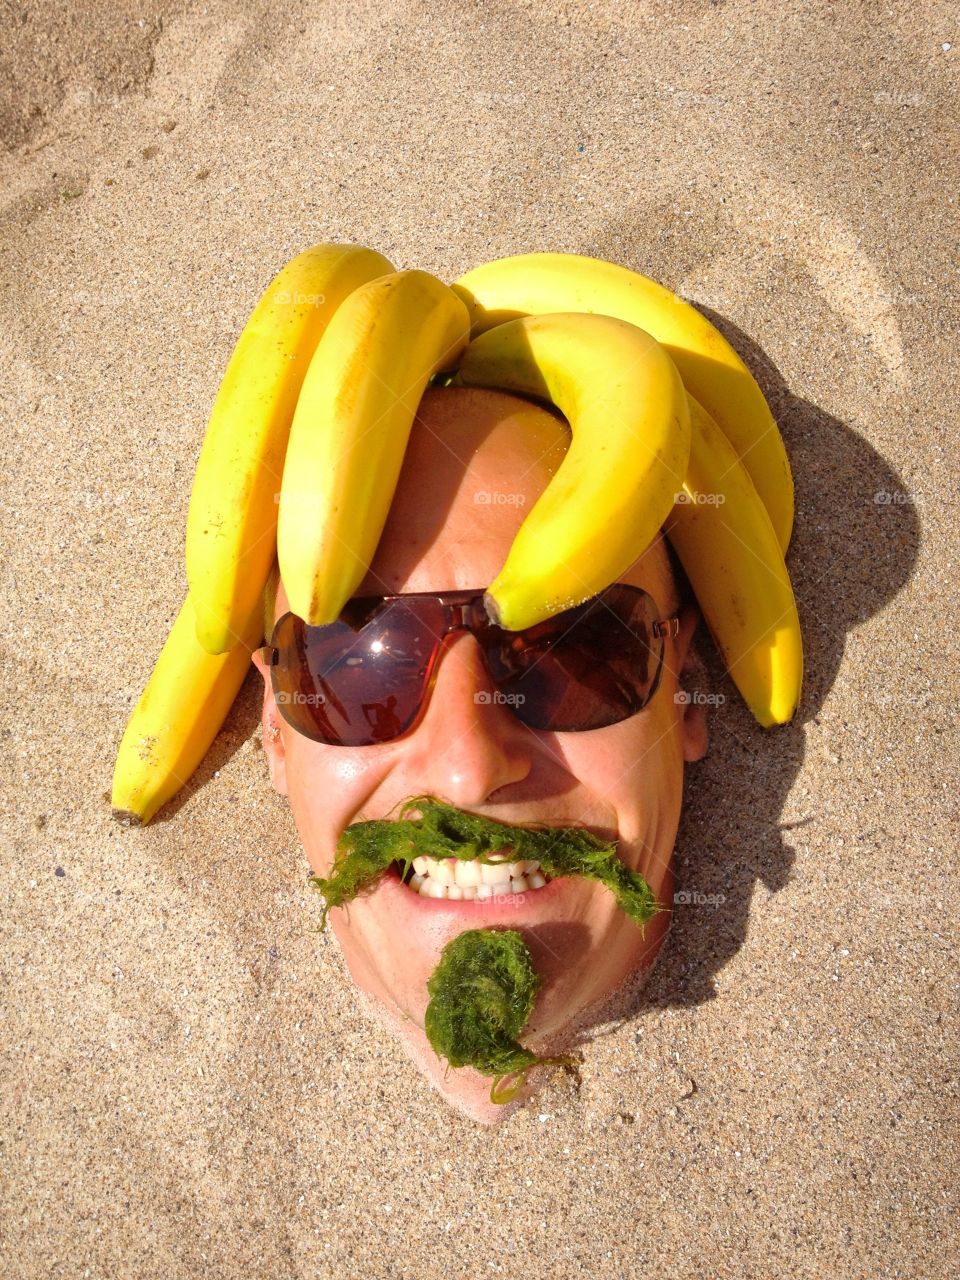 Cheerful man with seaweed and banana buried in sand